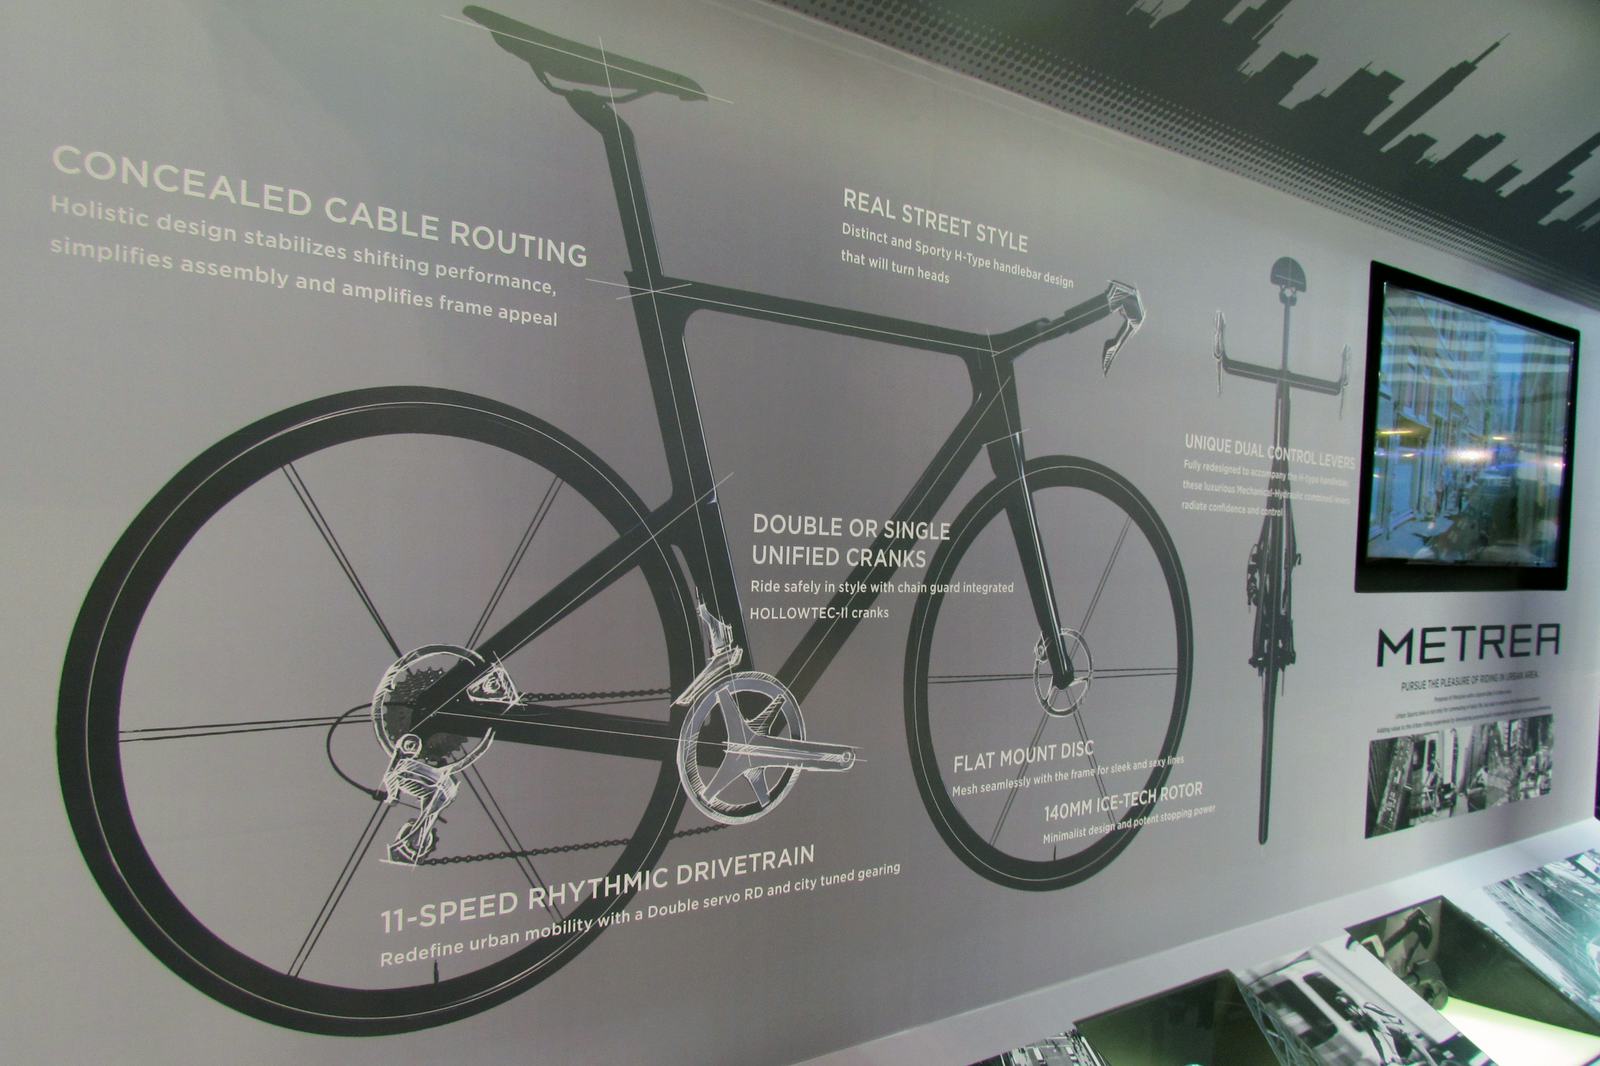 Shimano presents the Metrea groupset targeting a new bike category called Urban Sports Bikes. – Photo Bike Europe